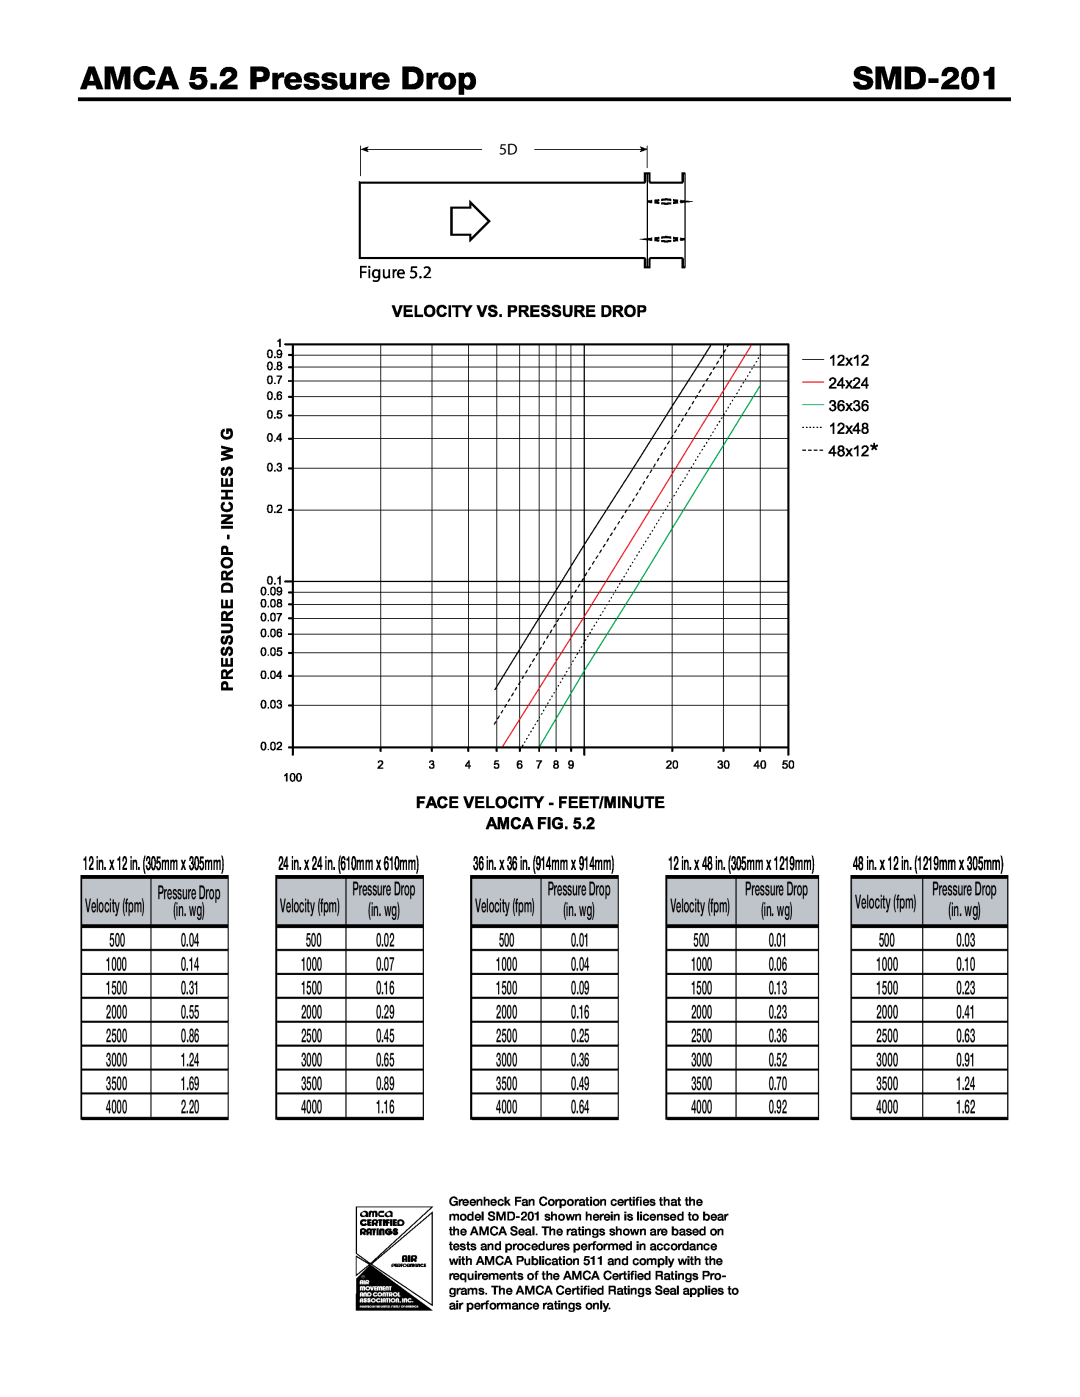 Greenheck Fan SMD-201 dimensions AMCA 5.2 Pressure Drop, 1000, 1500, 2000, 2500, 3000, 3500, 4000 